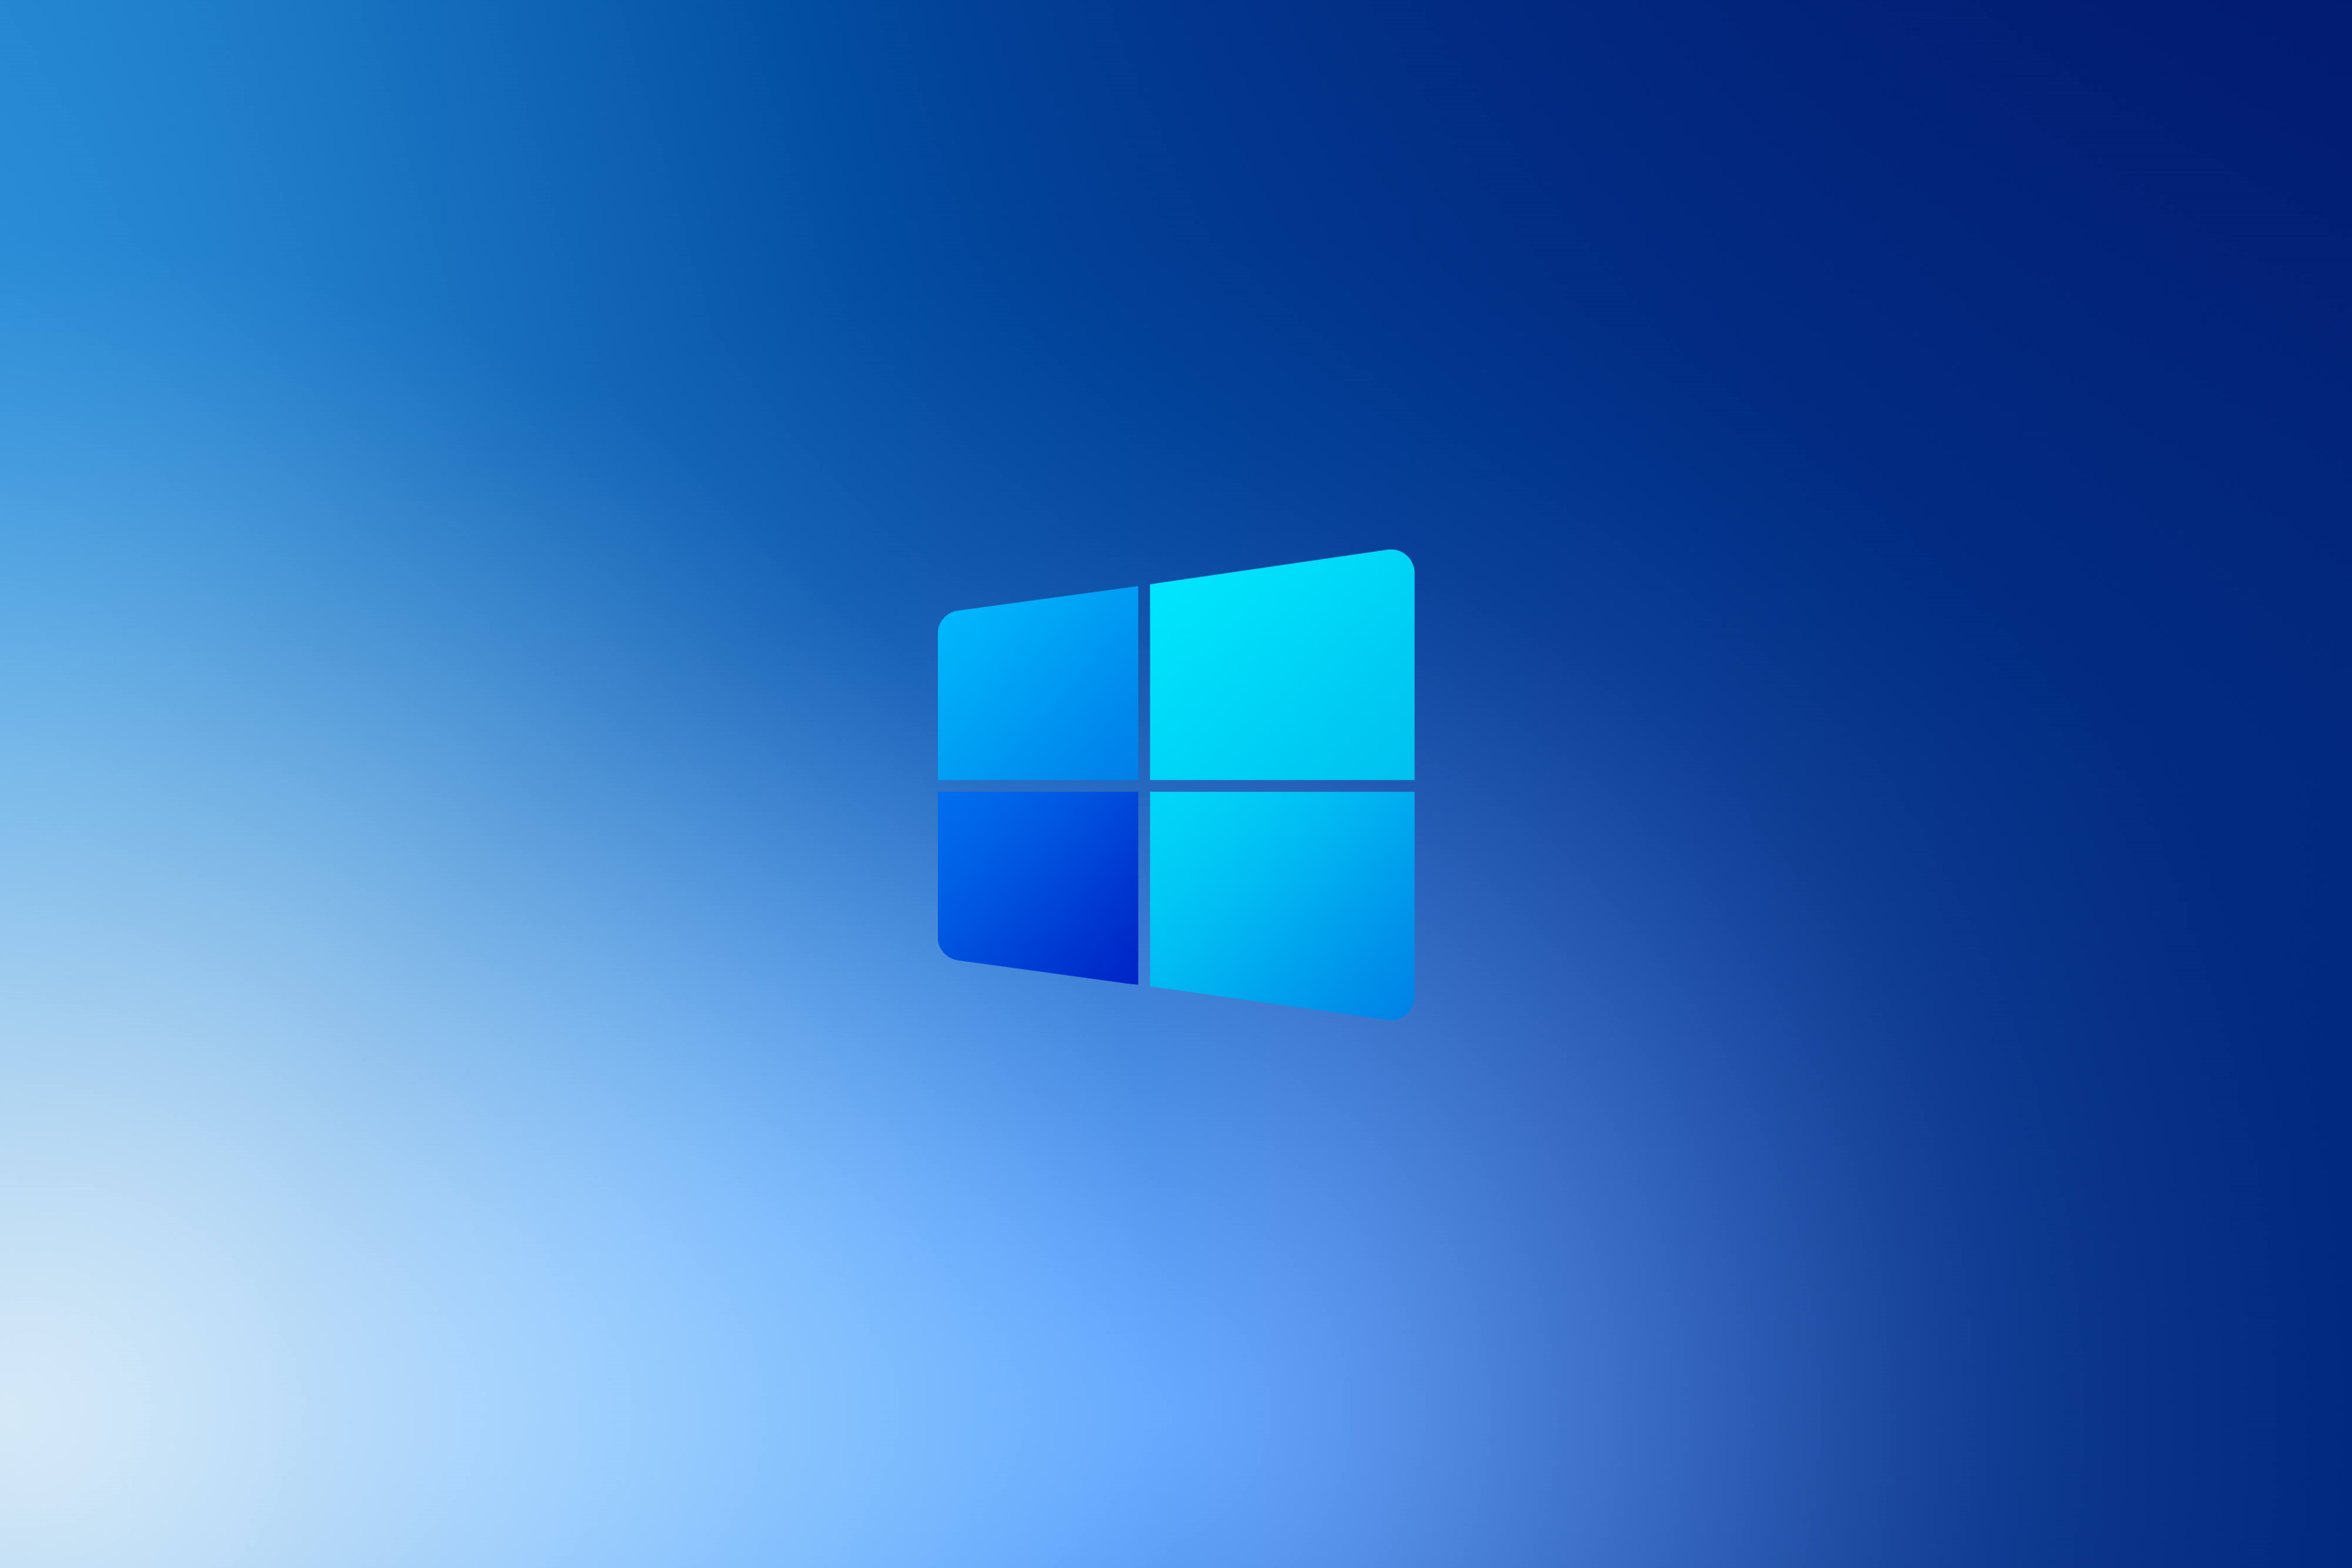 Windows 10X Wallpaper by protheme on DeviantArt